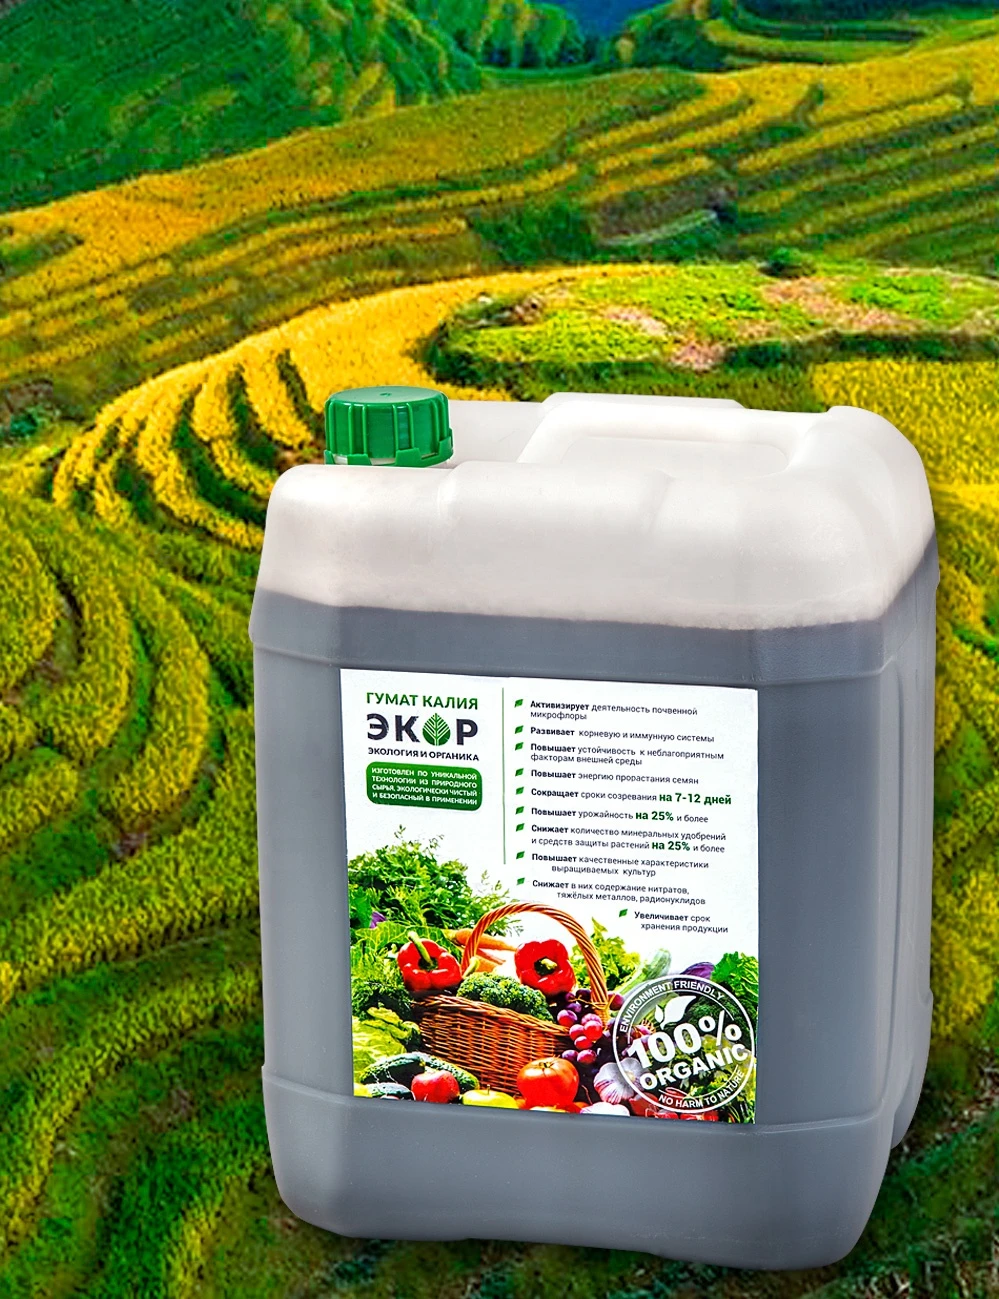 EKOR Humic Acid Liquid Organic Fertilizer for barley